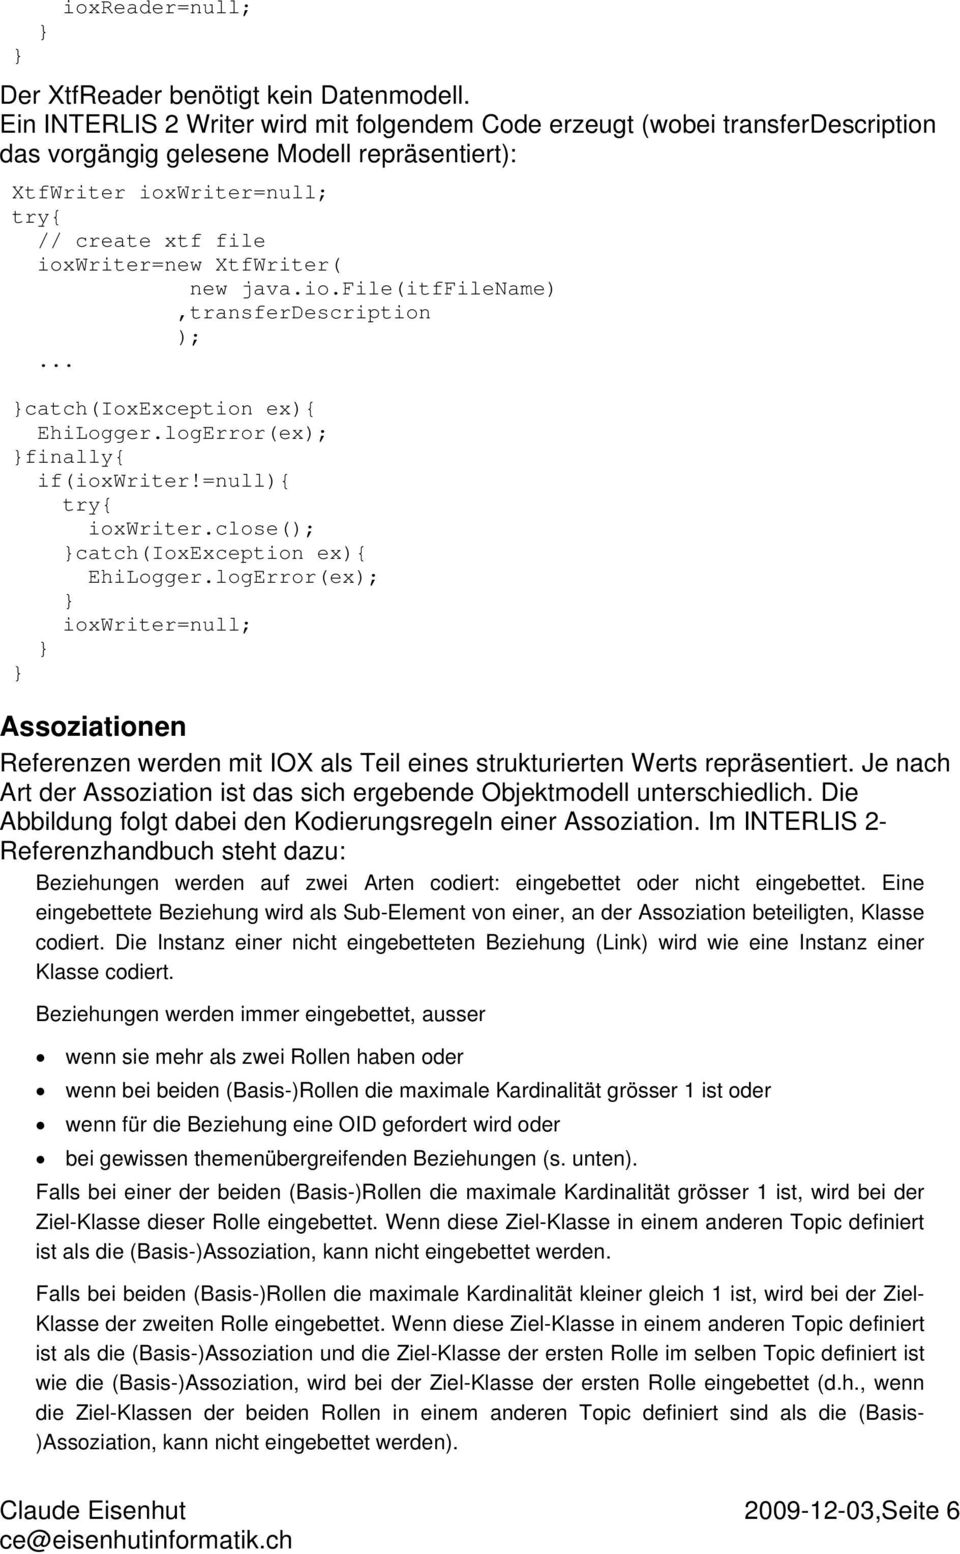 new java.io.file(itffilename),transferdescription ); catch(ioxexception ex){ finally{ if(ioxwriter!=null){ ioxwriter.